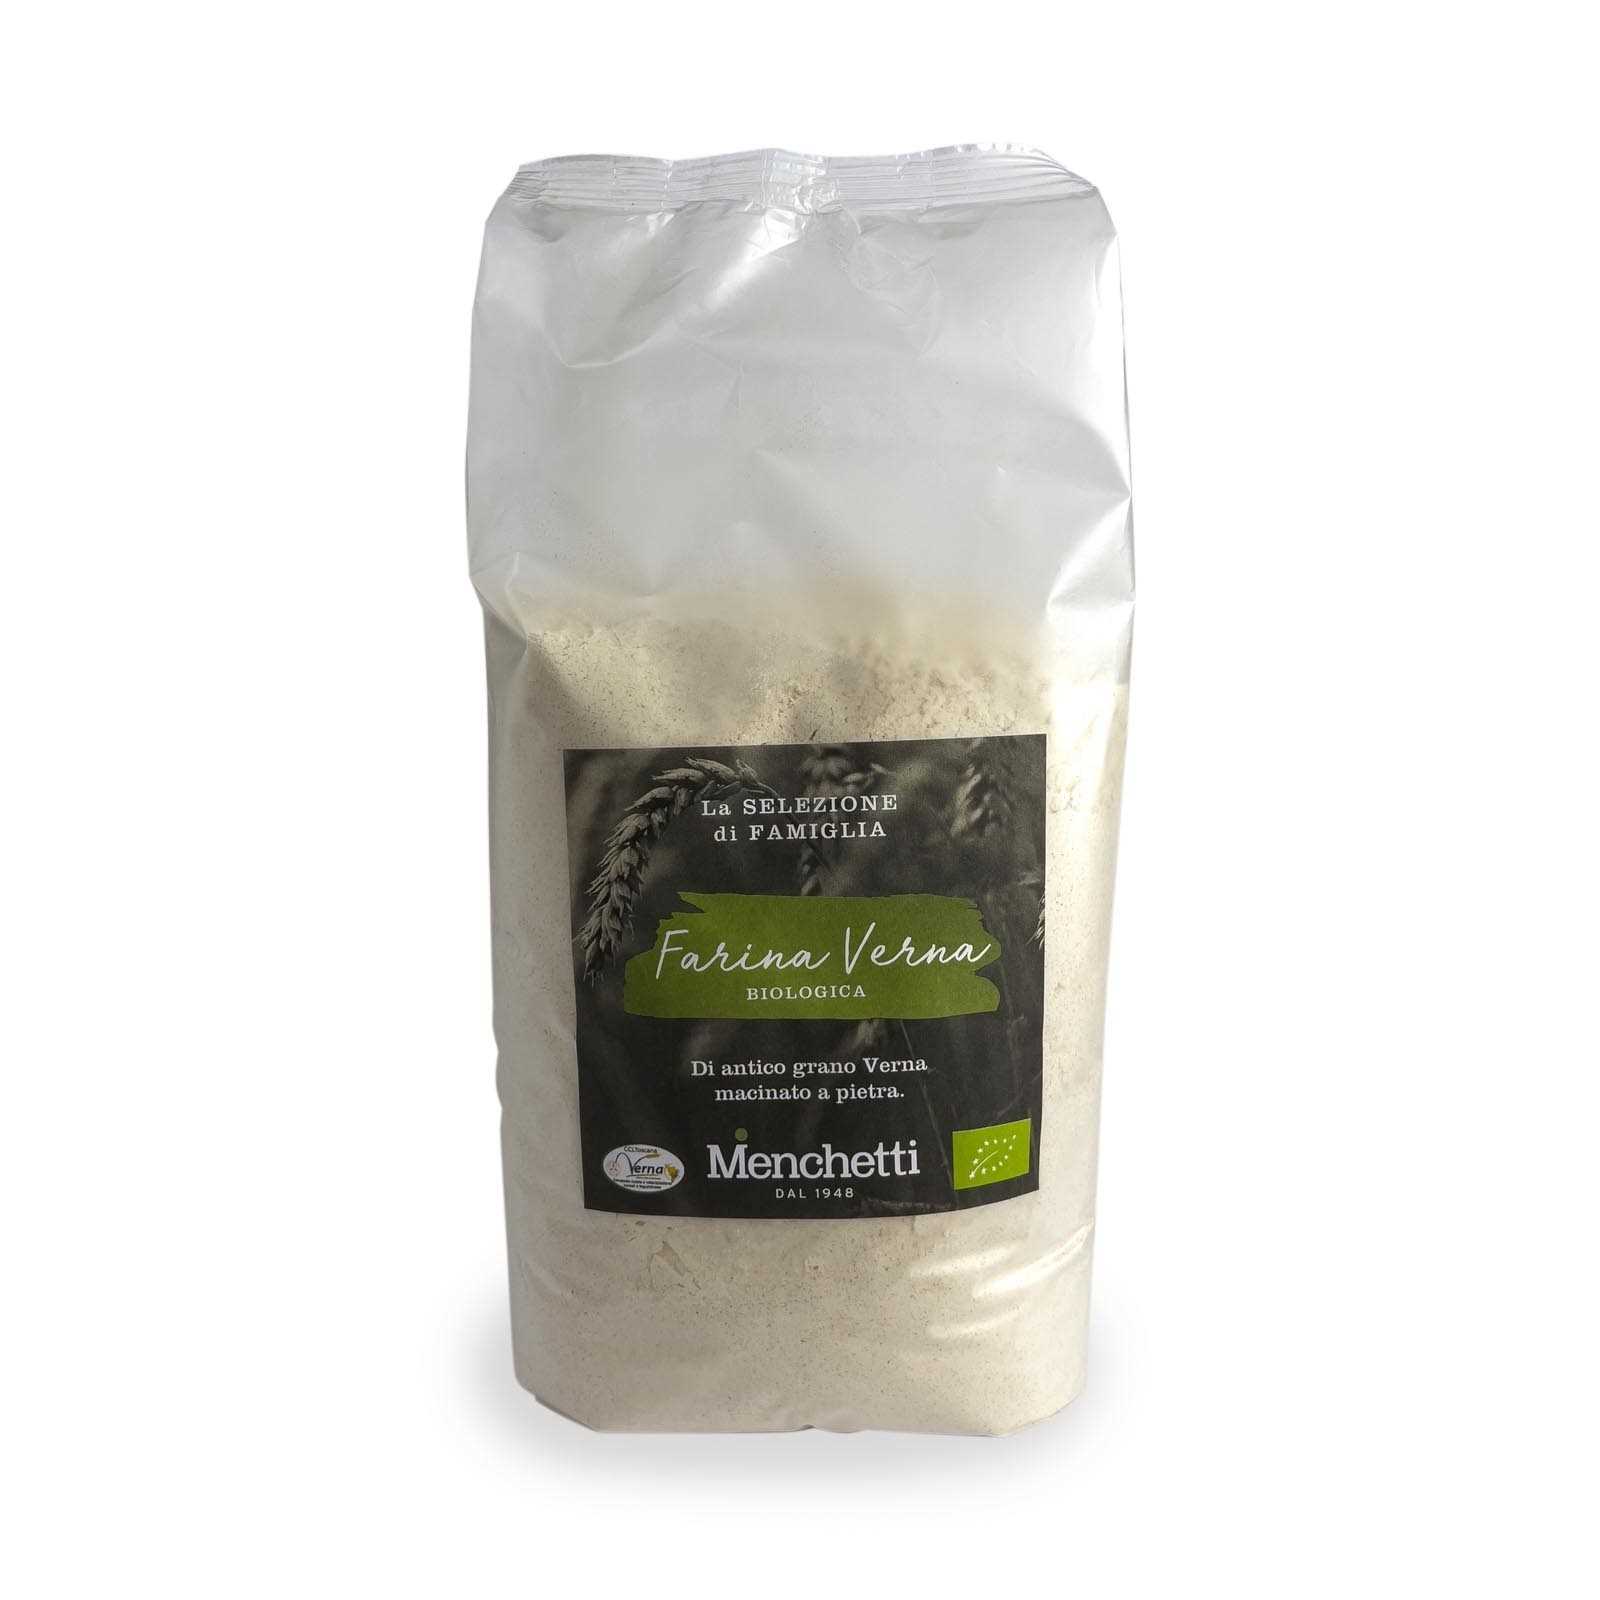 Type “2” Verna wheat flour from organic farming, stone ground.